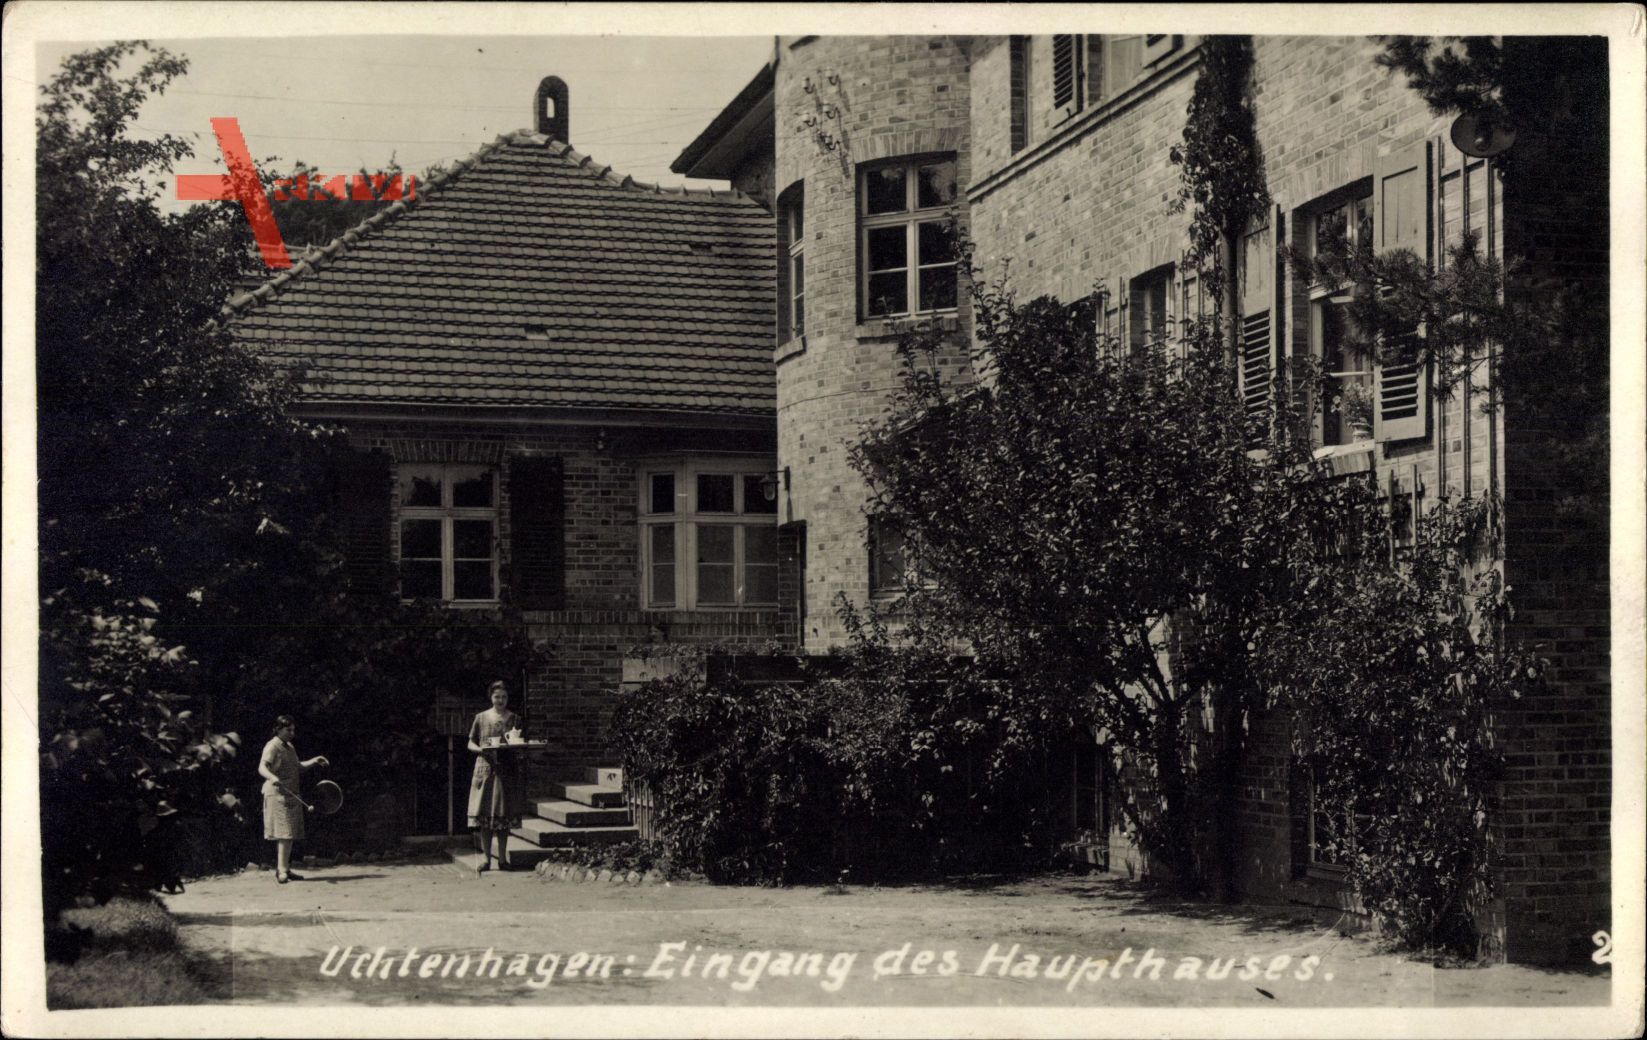 Falkenberg Mark, Eingang des Haupthauses, Stift Uchtenhagen